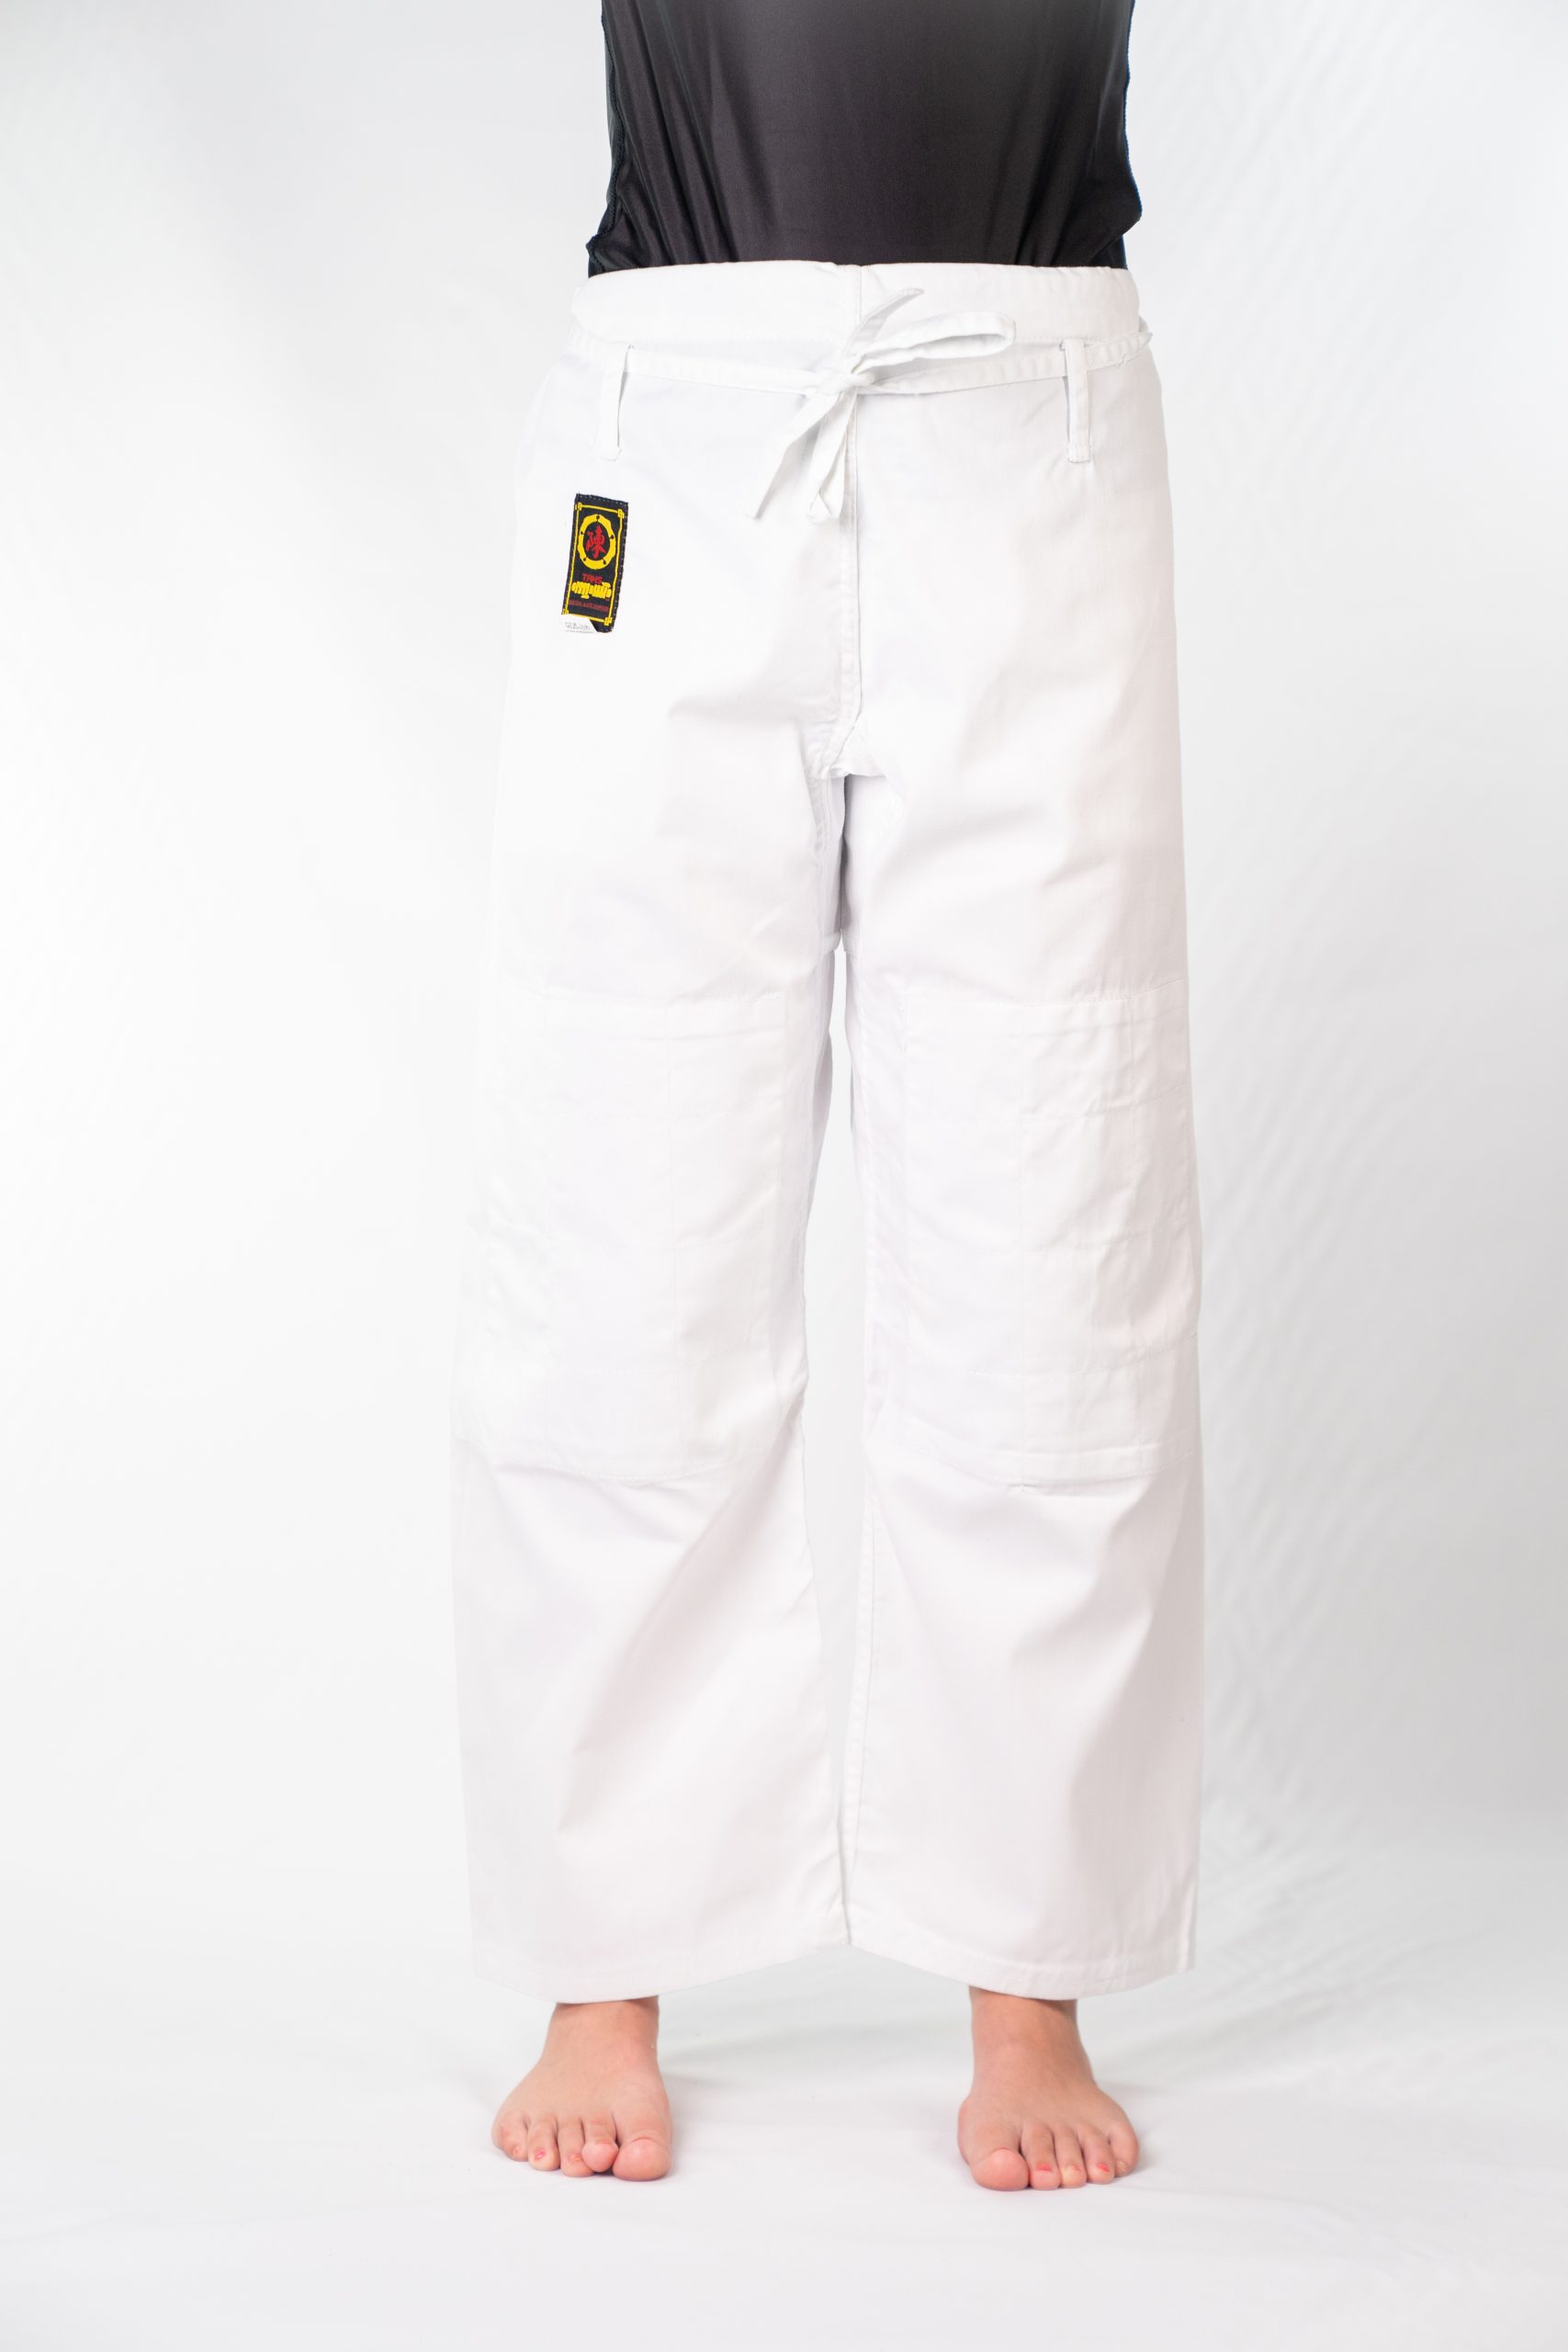 Tinymori Taichi Lantern Pants Tai Chi Training Pants  Kung Fu Taichi  Practice Uniforms Martial Arts Clothing Bottoms Cotton Large